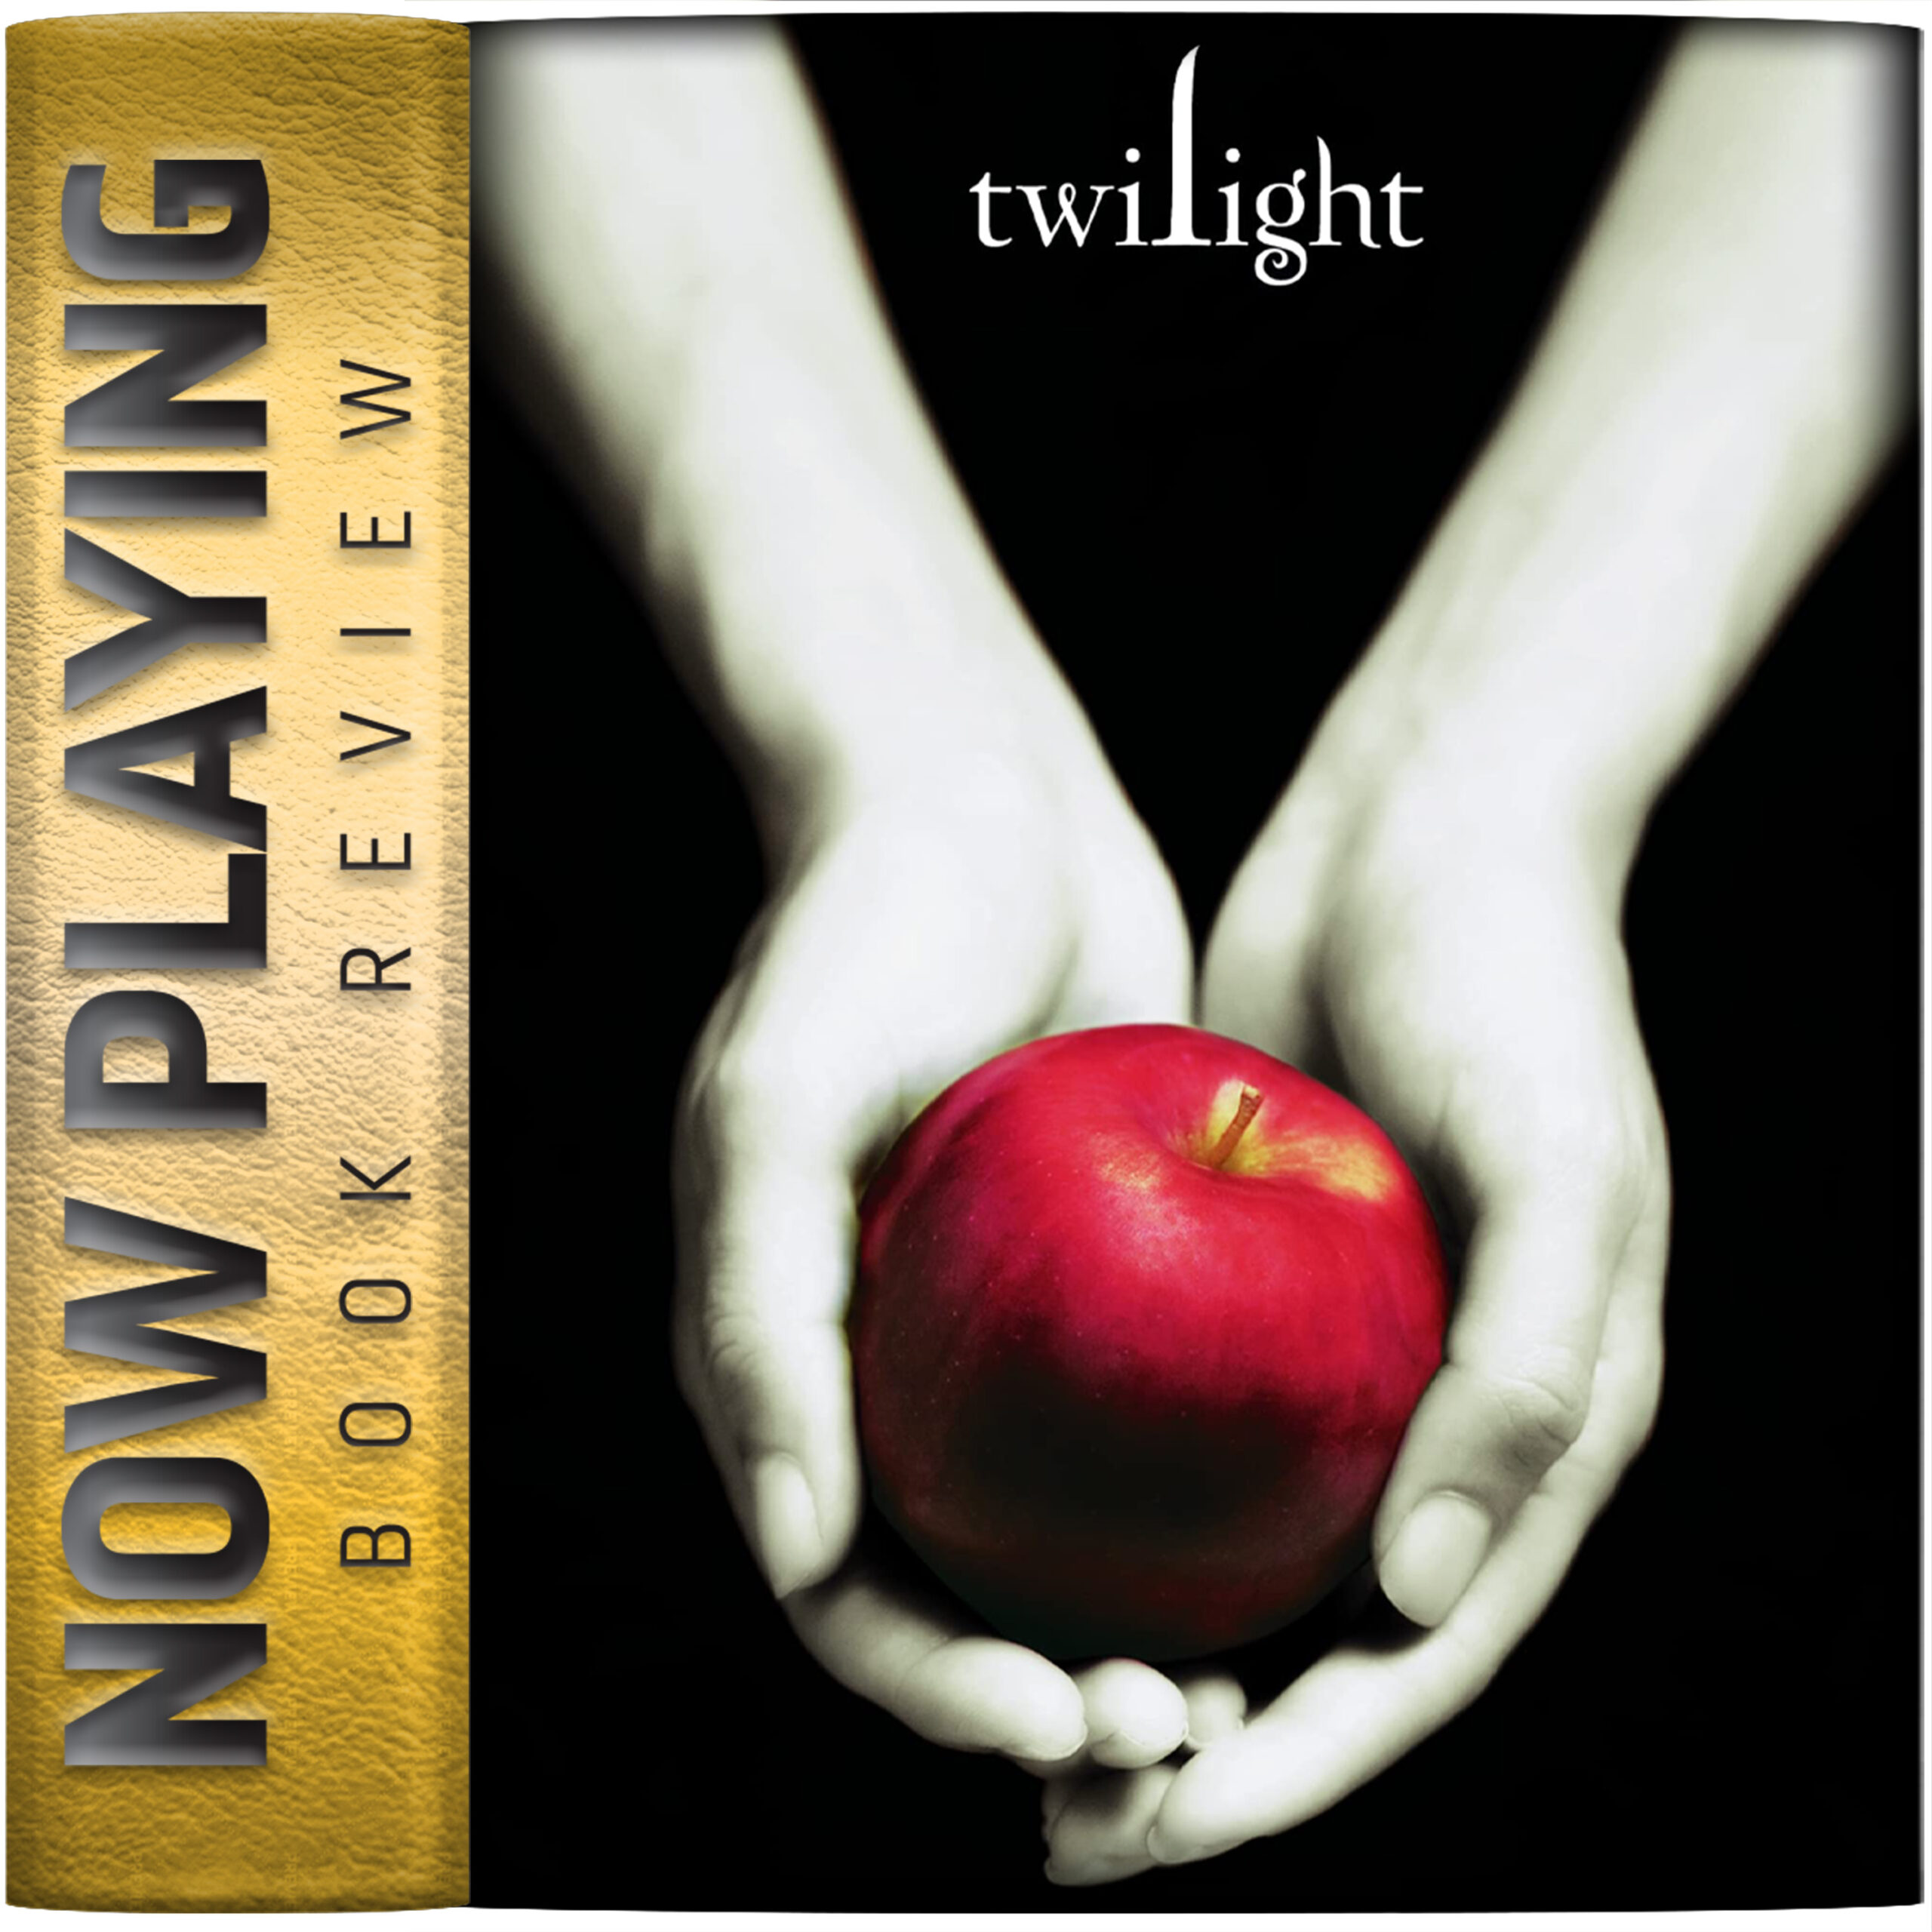 Book Review: Twilight by Stephenie Meyer